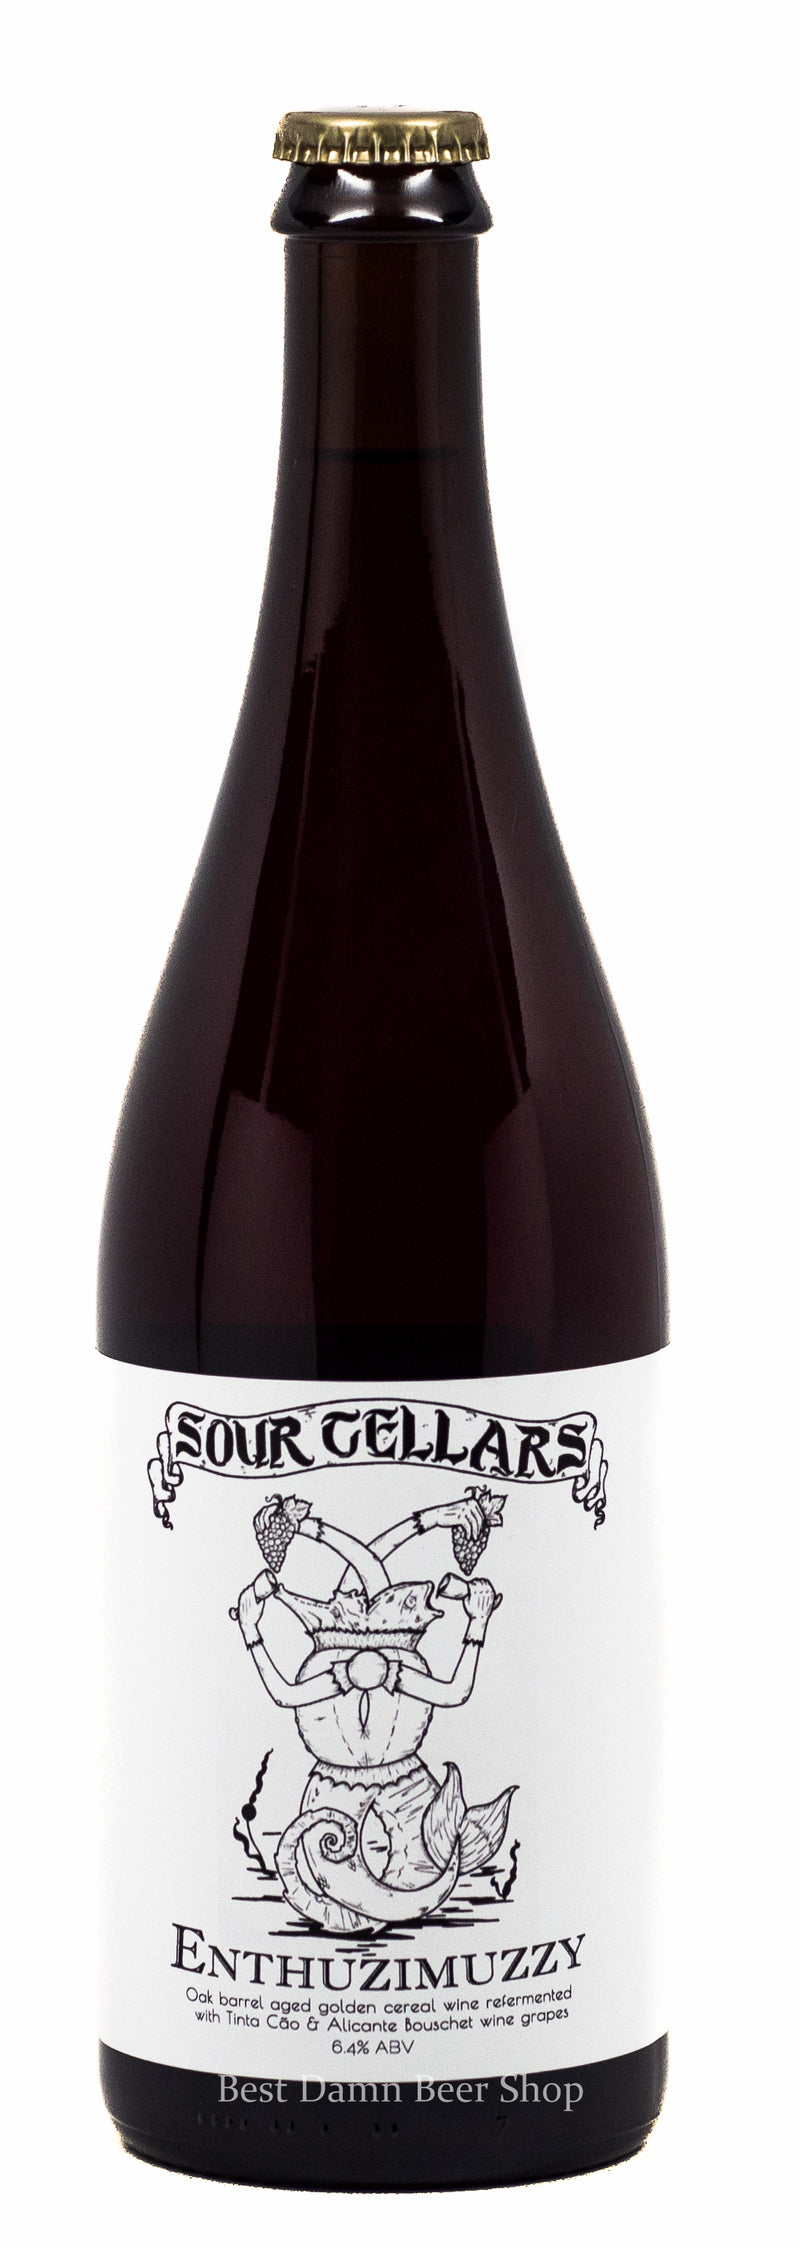 Sour Cellars Enthuzimuzzy tinta cao and alicante bouschet red grapes 750ml